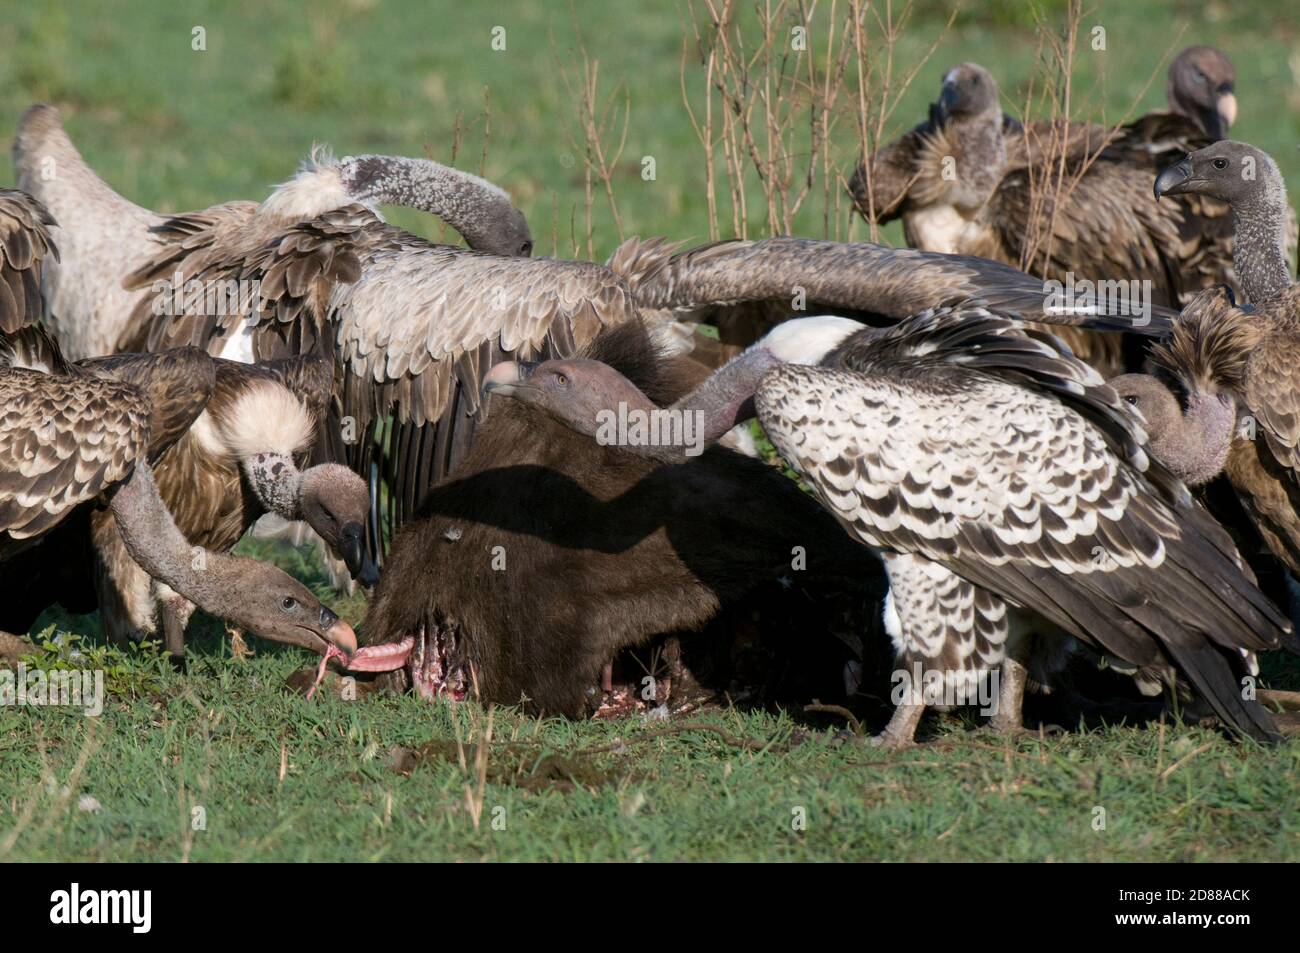 Vultures eating Wildebeest, Masai Mara National Reserve, Kenya. Stock Photo